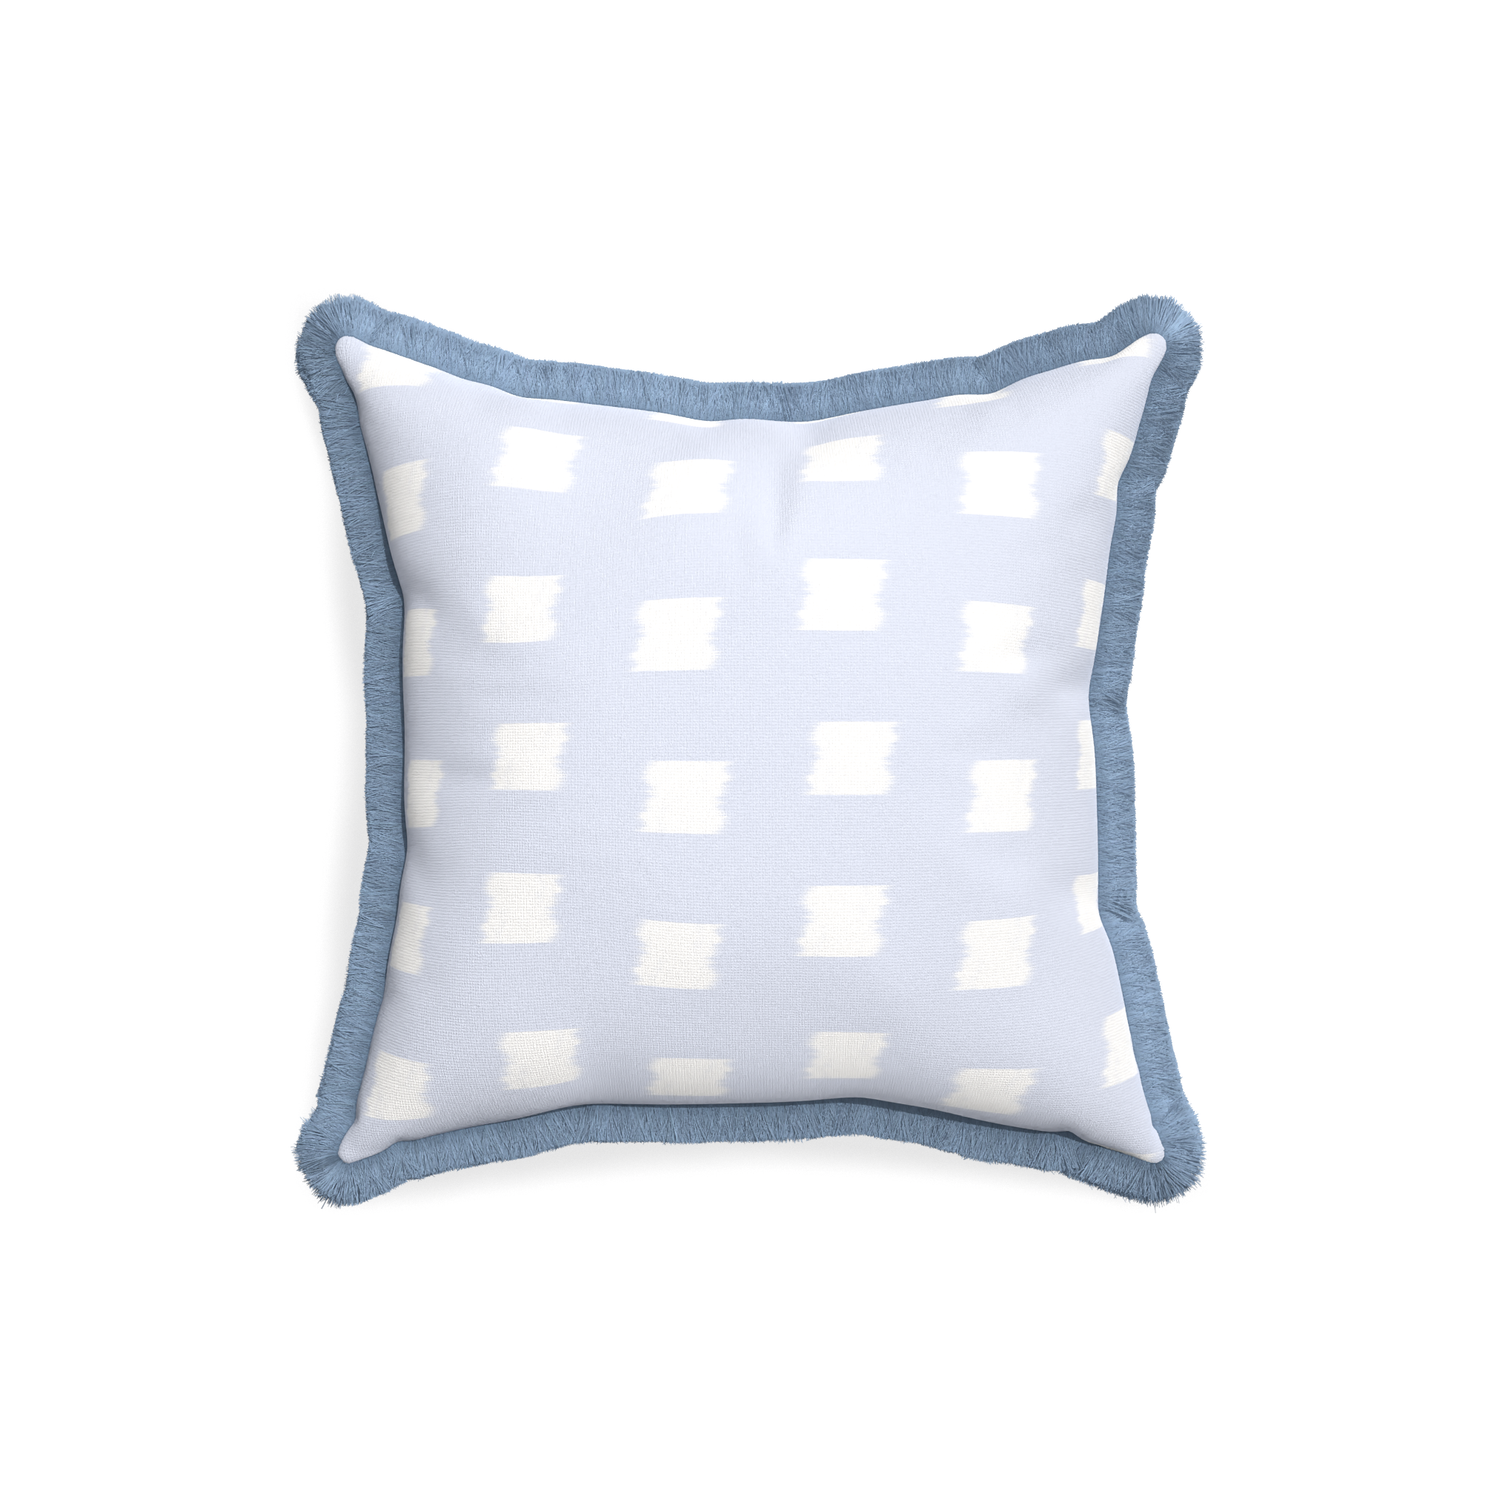 18-square denton custom sky blue patternpillow with sky fringe on white background